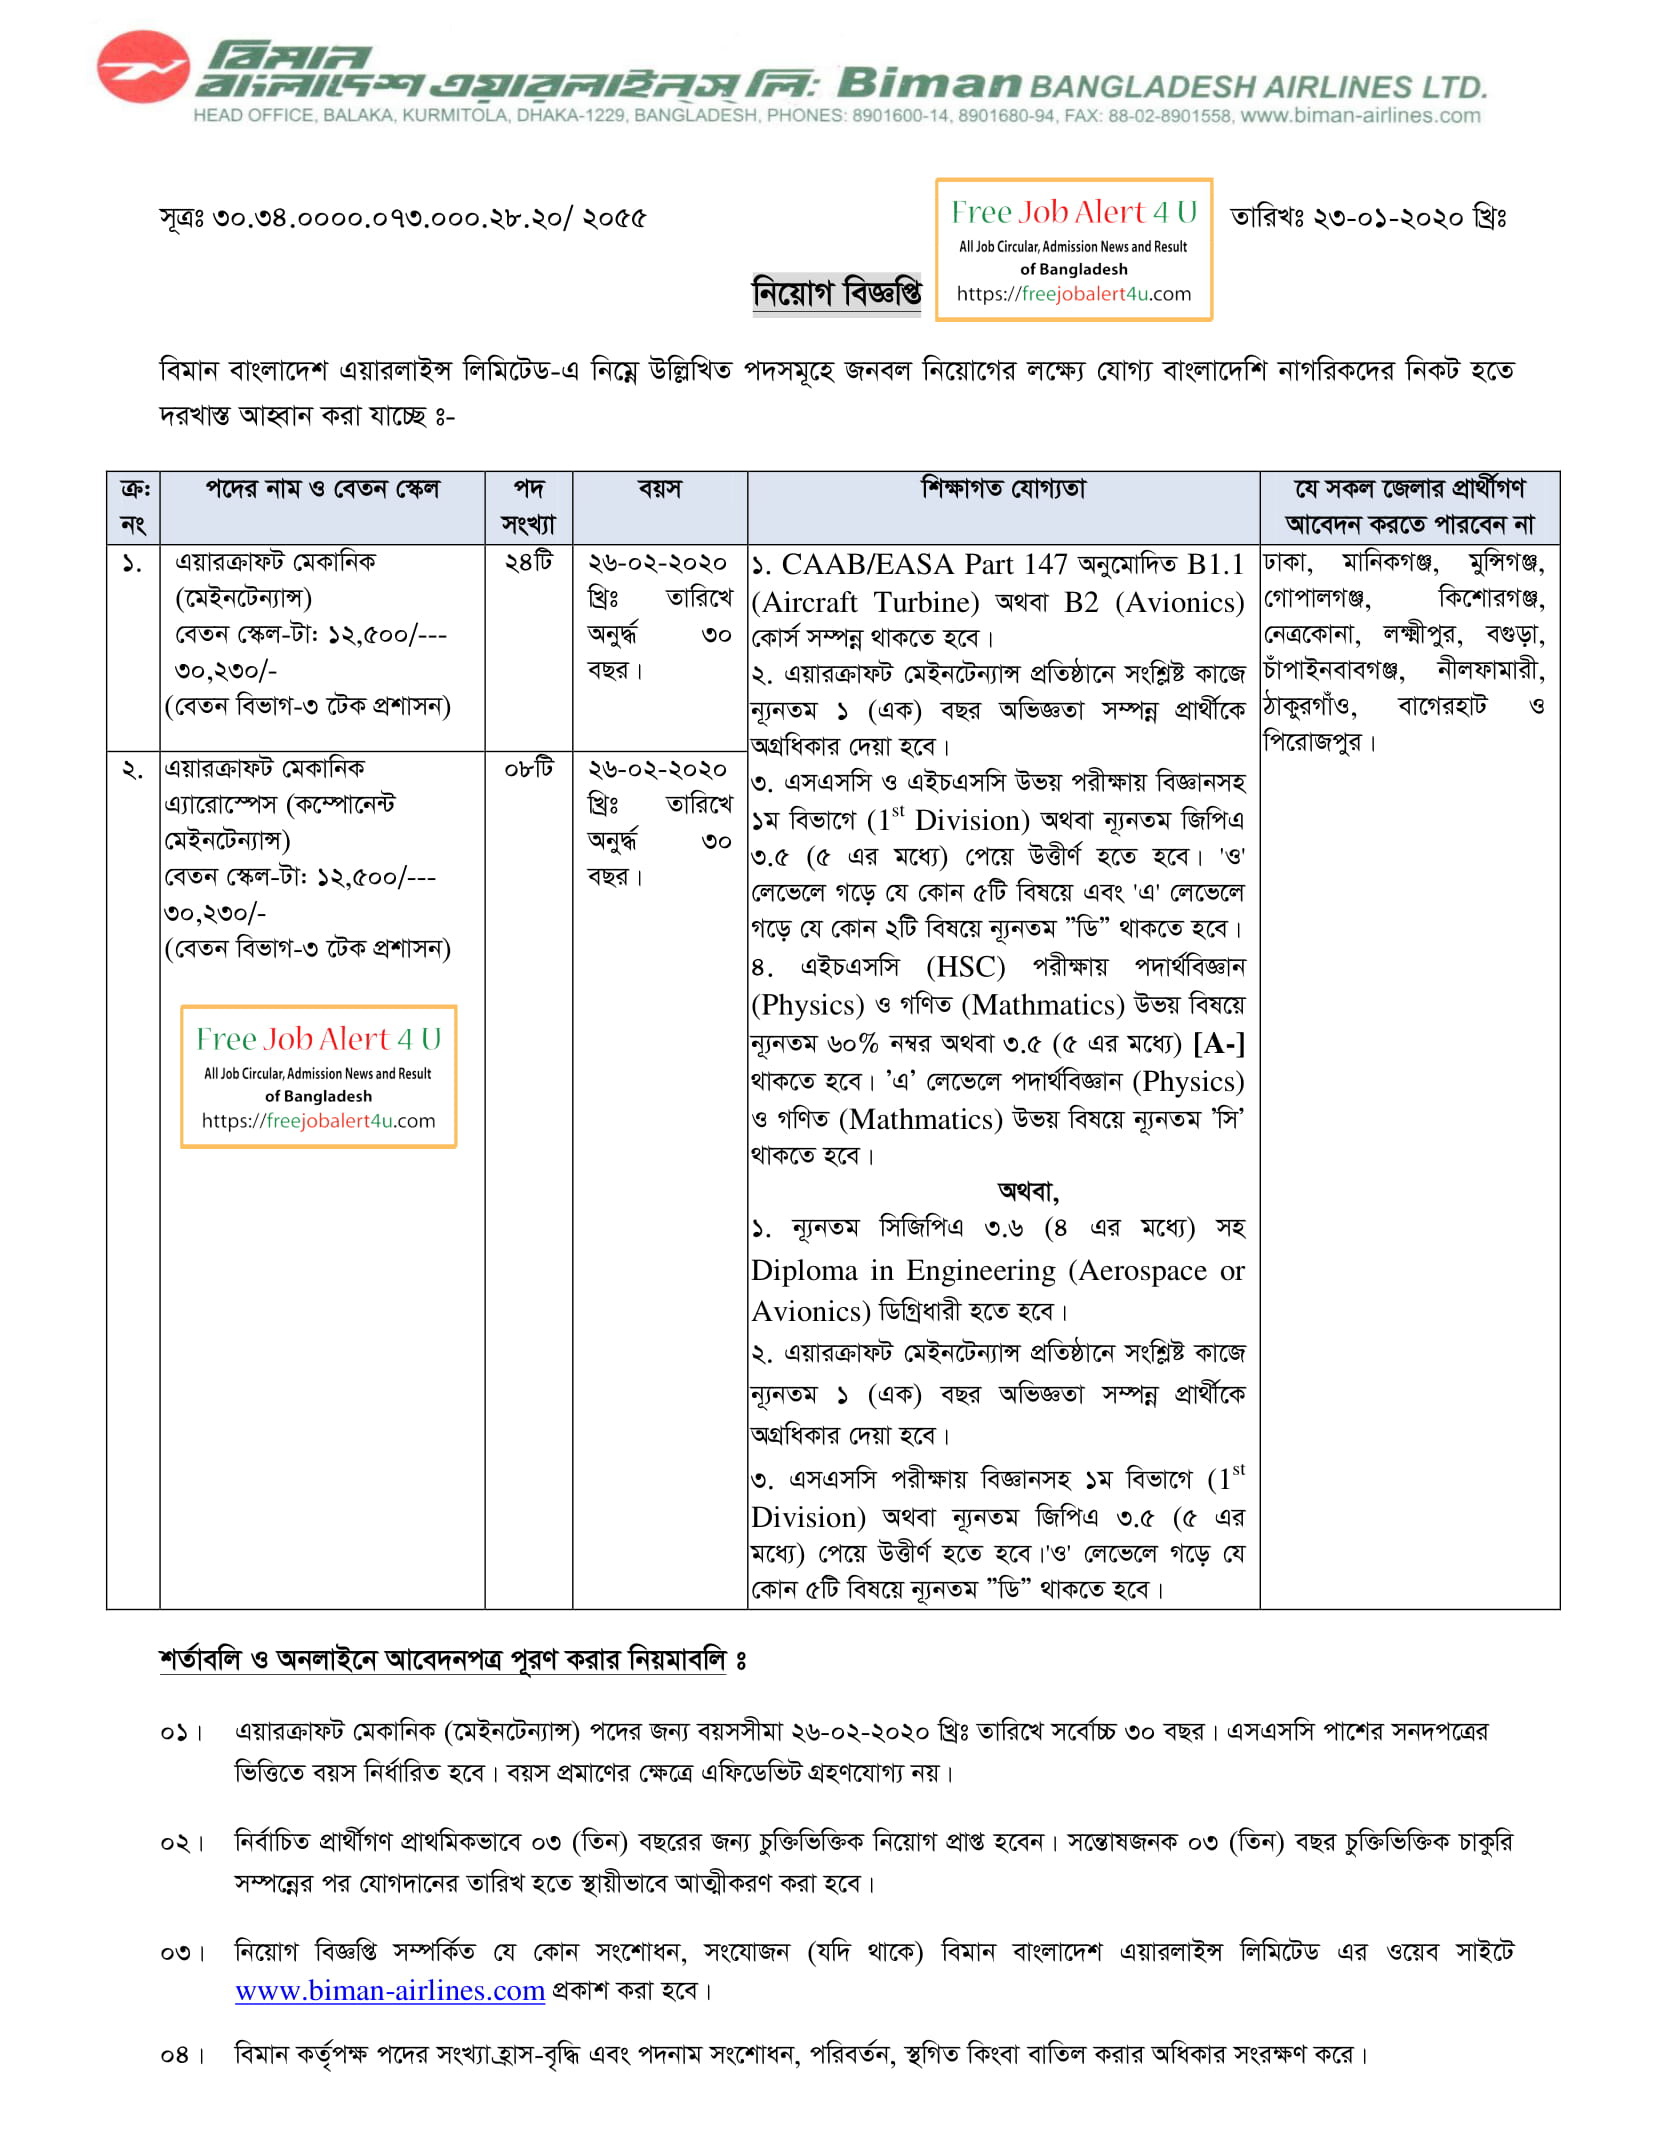 Biman Bangladesh Airlines Limited (BBAL) job circular 2020